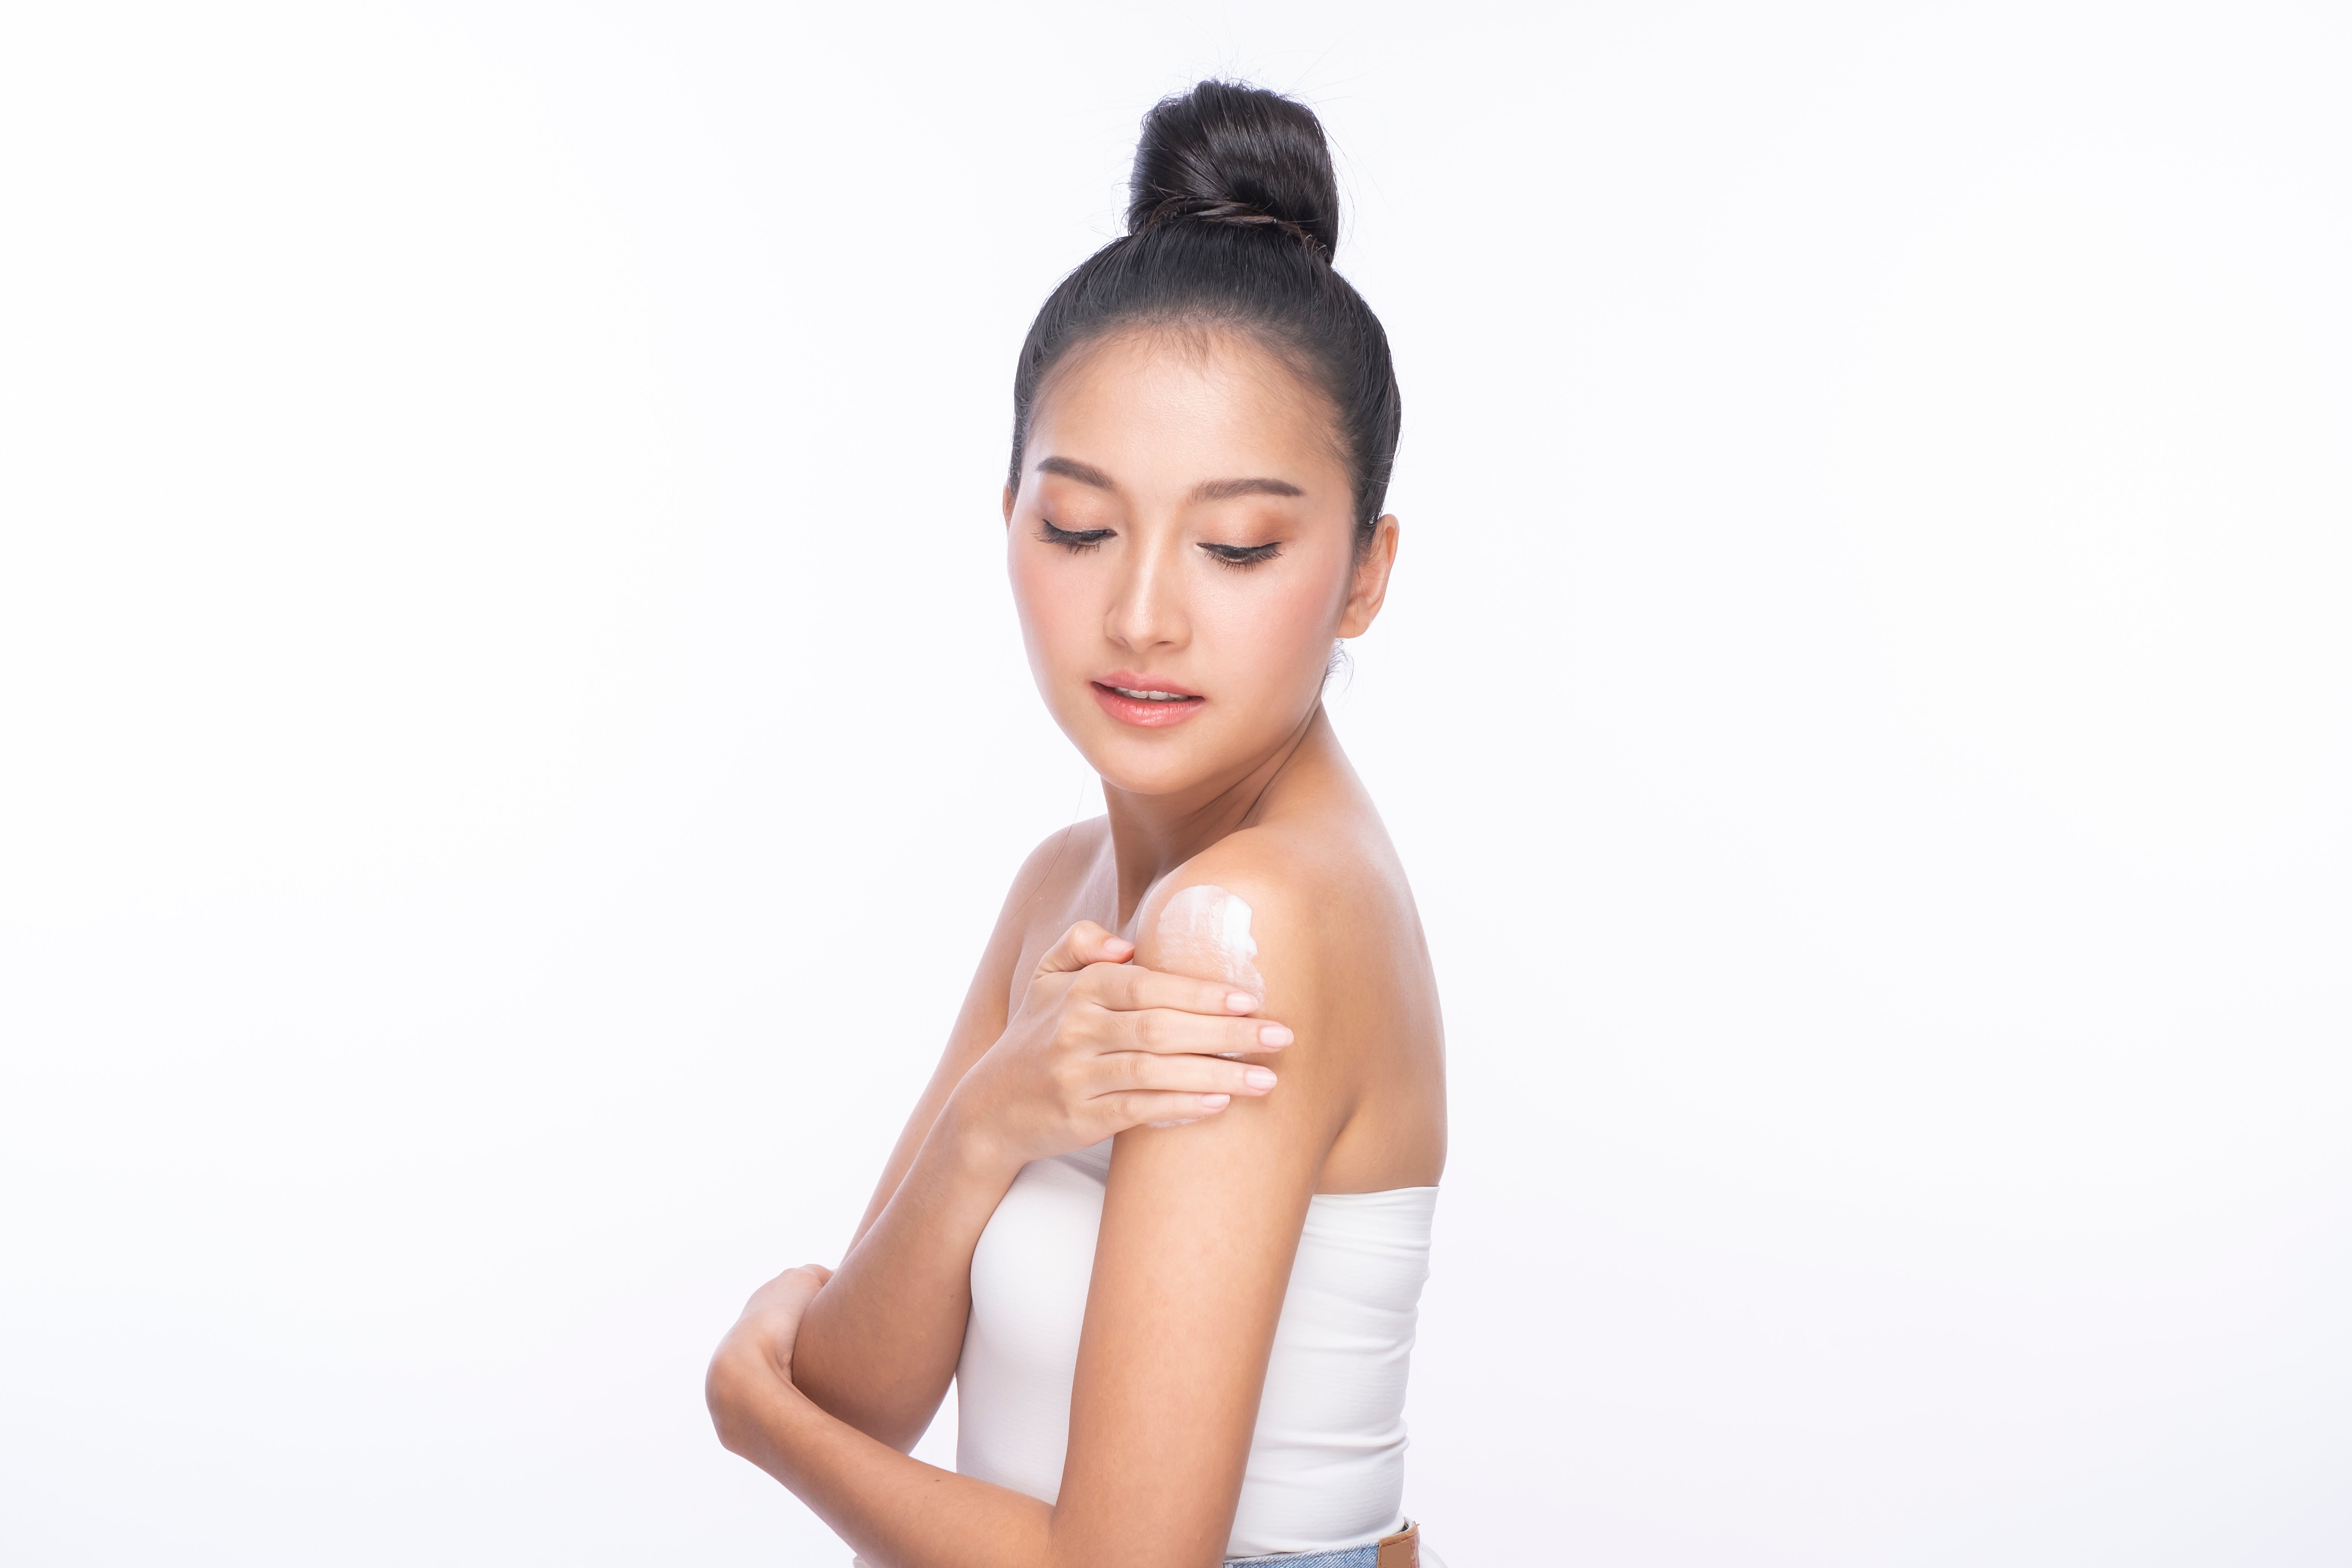 Photo of a woman moisturizing her skin | Source: Shutterstock